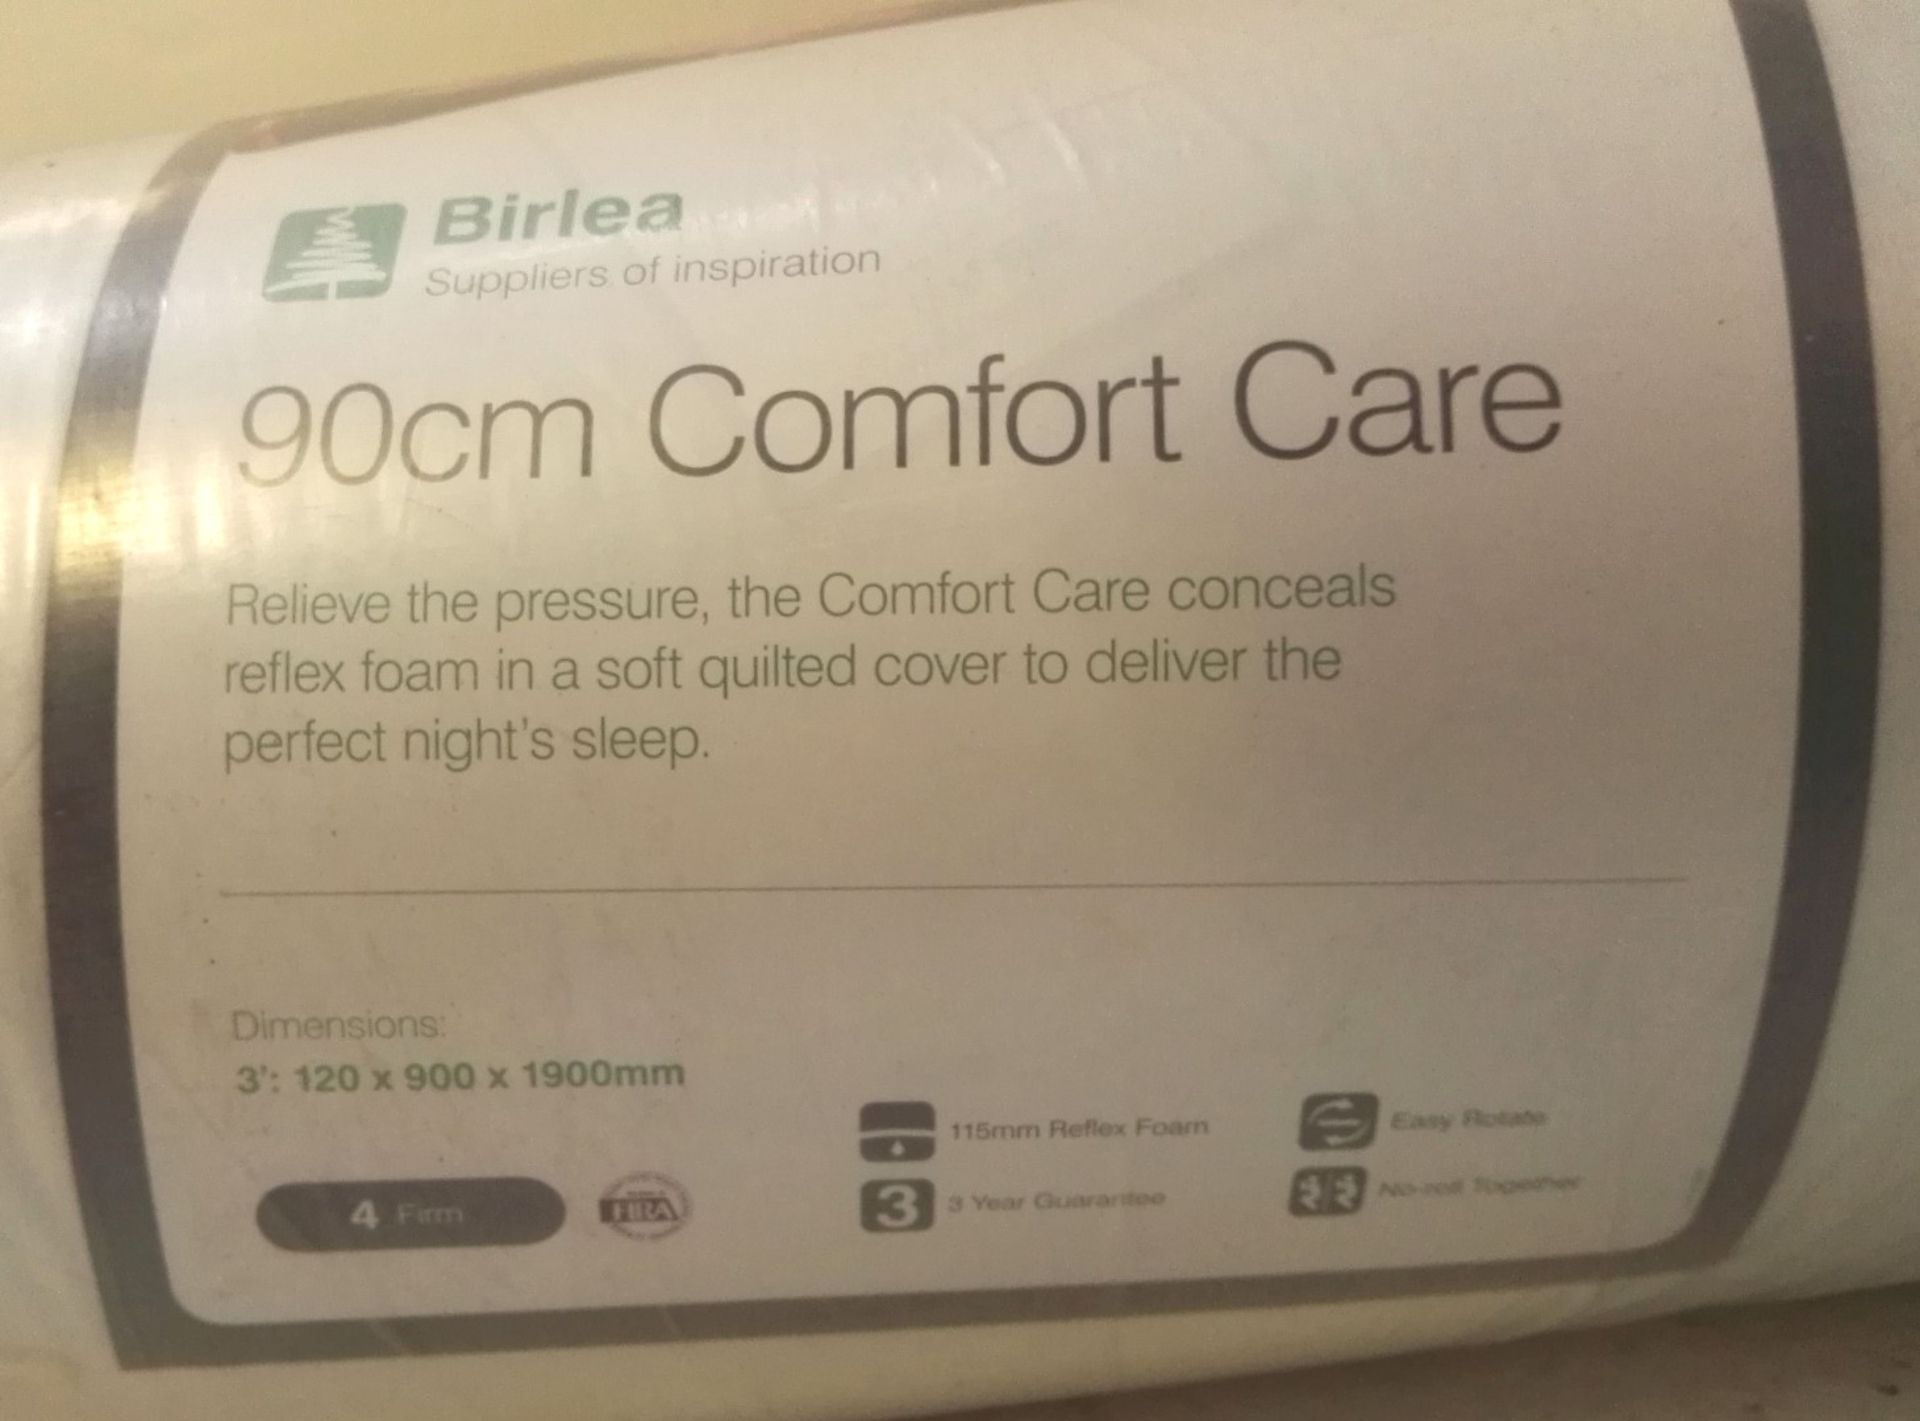 1 x Birlea 90cm Comfort Care Firm Rolled Up Reflex Foam Mattress - Brand New Stock - CL286 - - Image 3 of 6